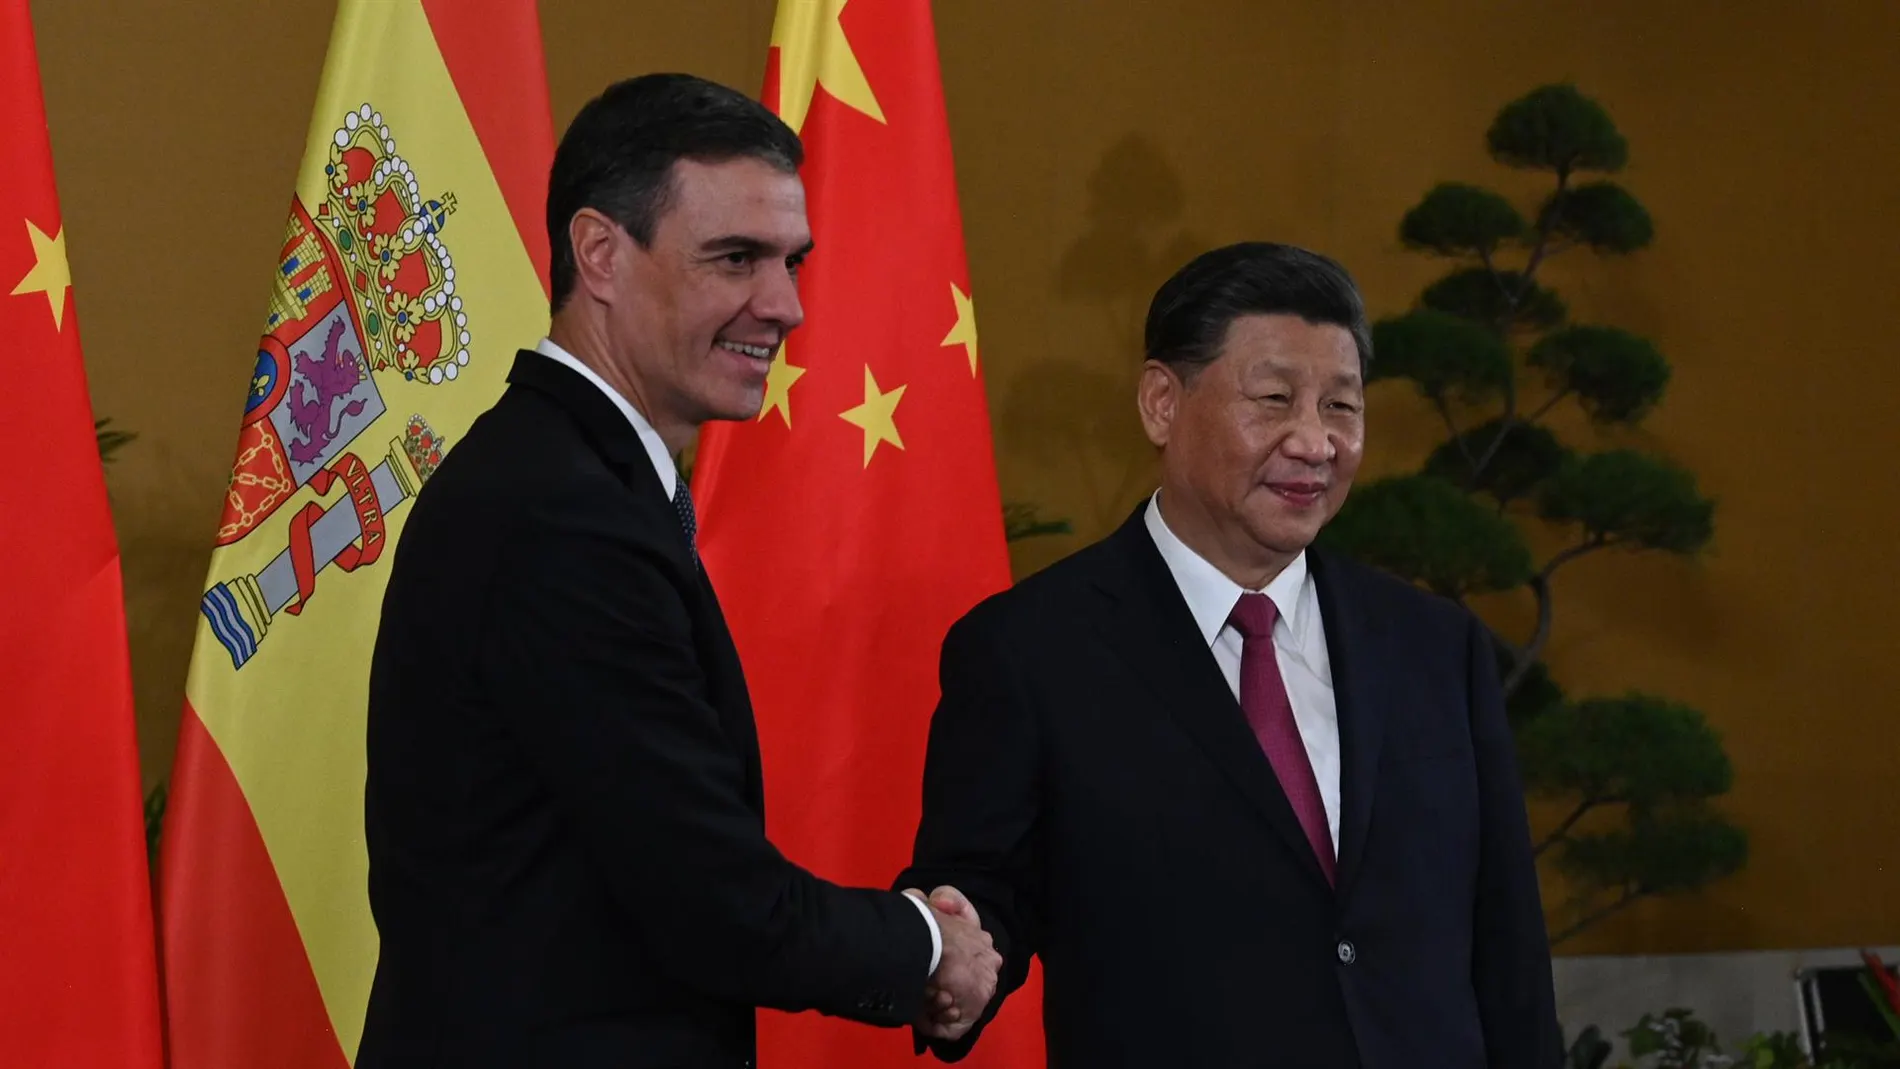 Pedro Sánchez y Xi Jingping, reunidos en la cumbre del G20